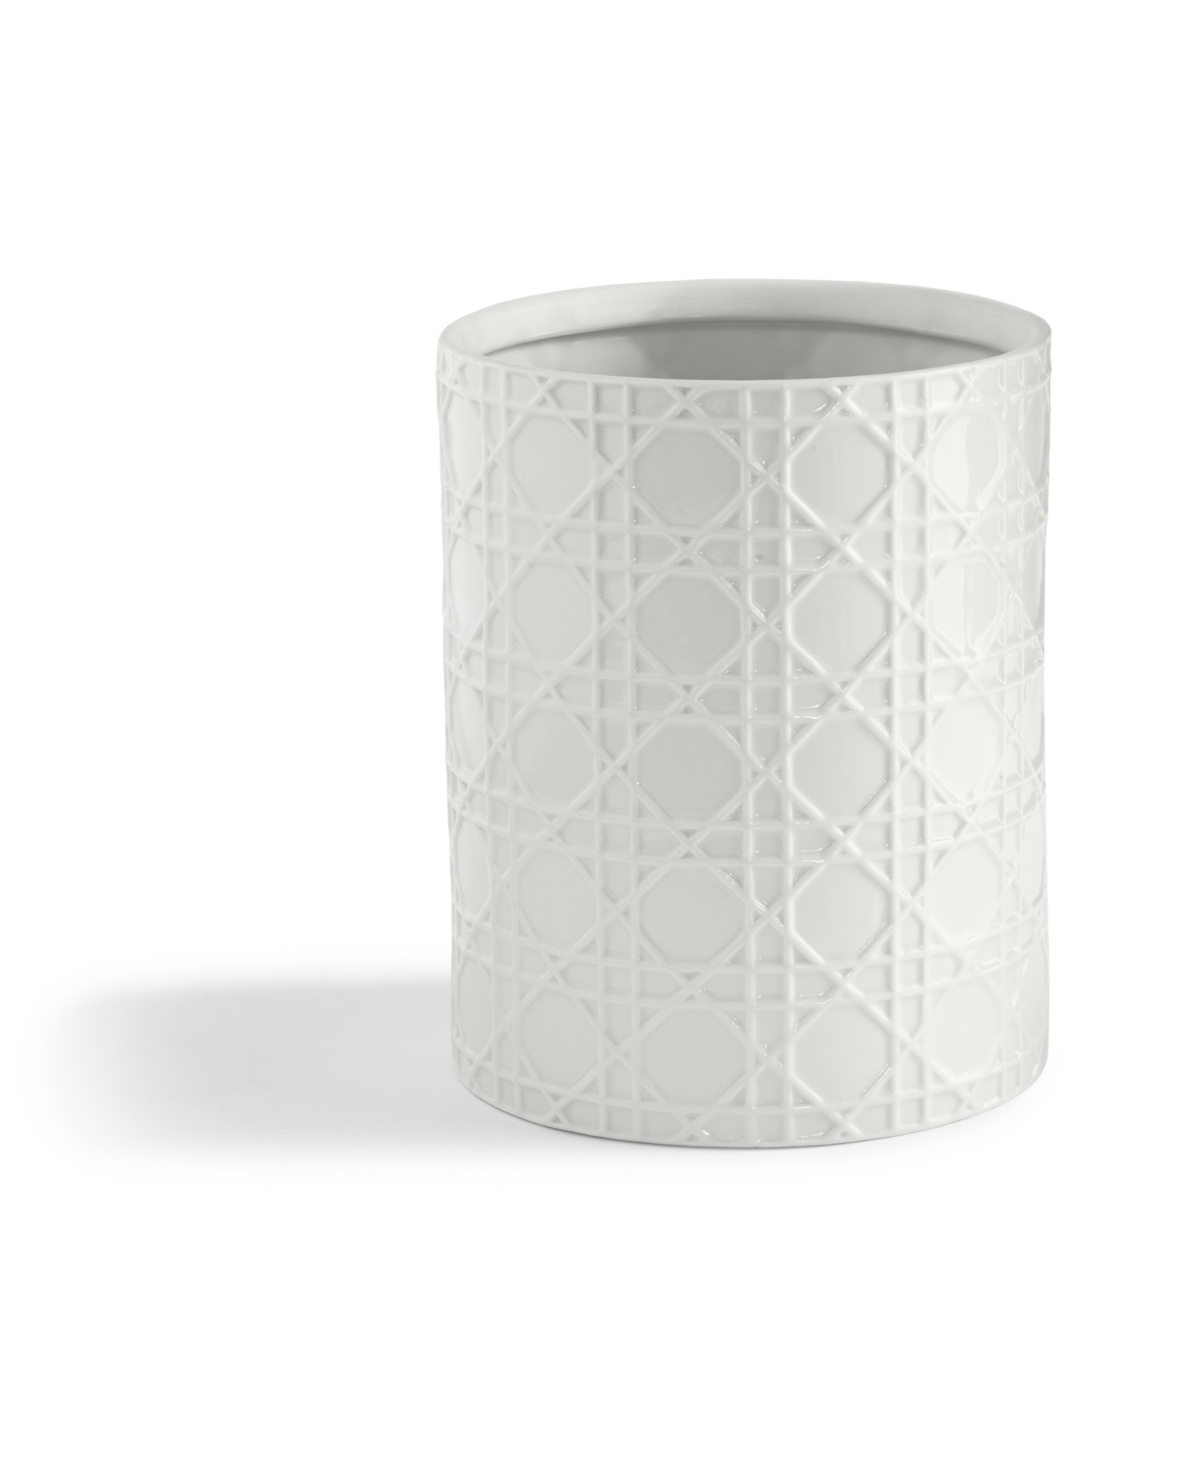 Wicker Embossed Porcelain Waste Basket - White